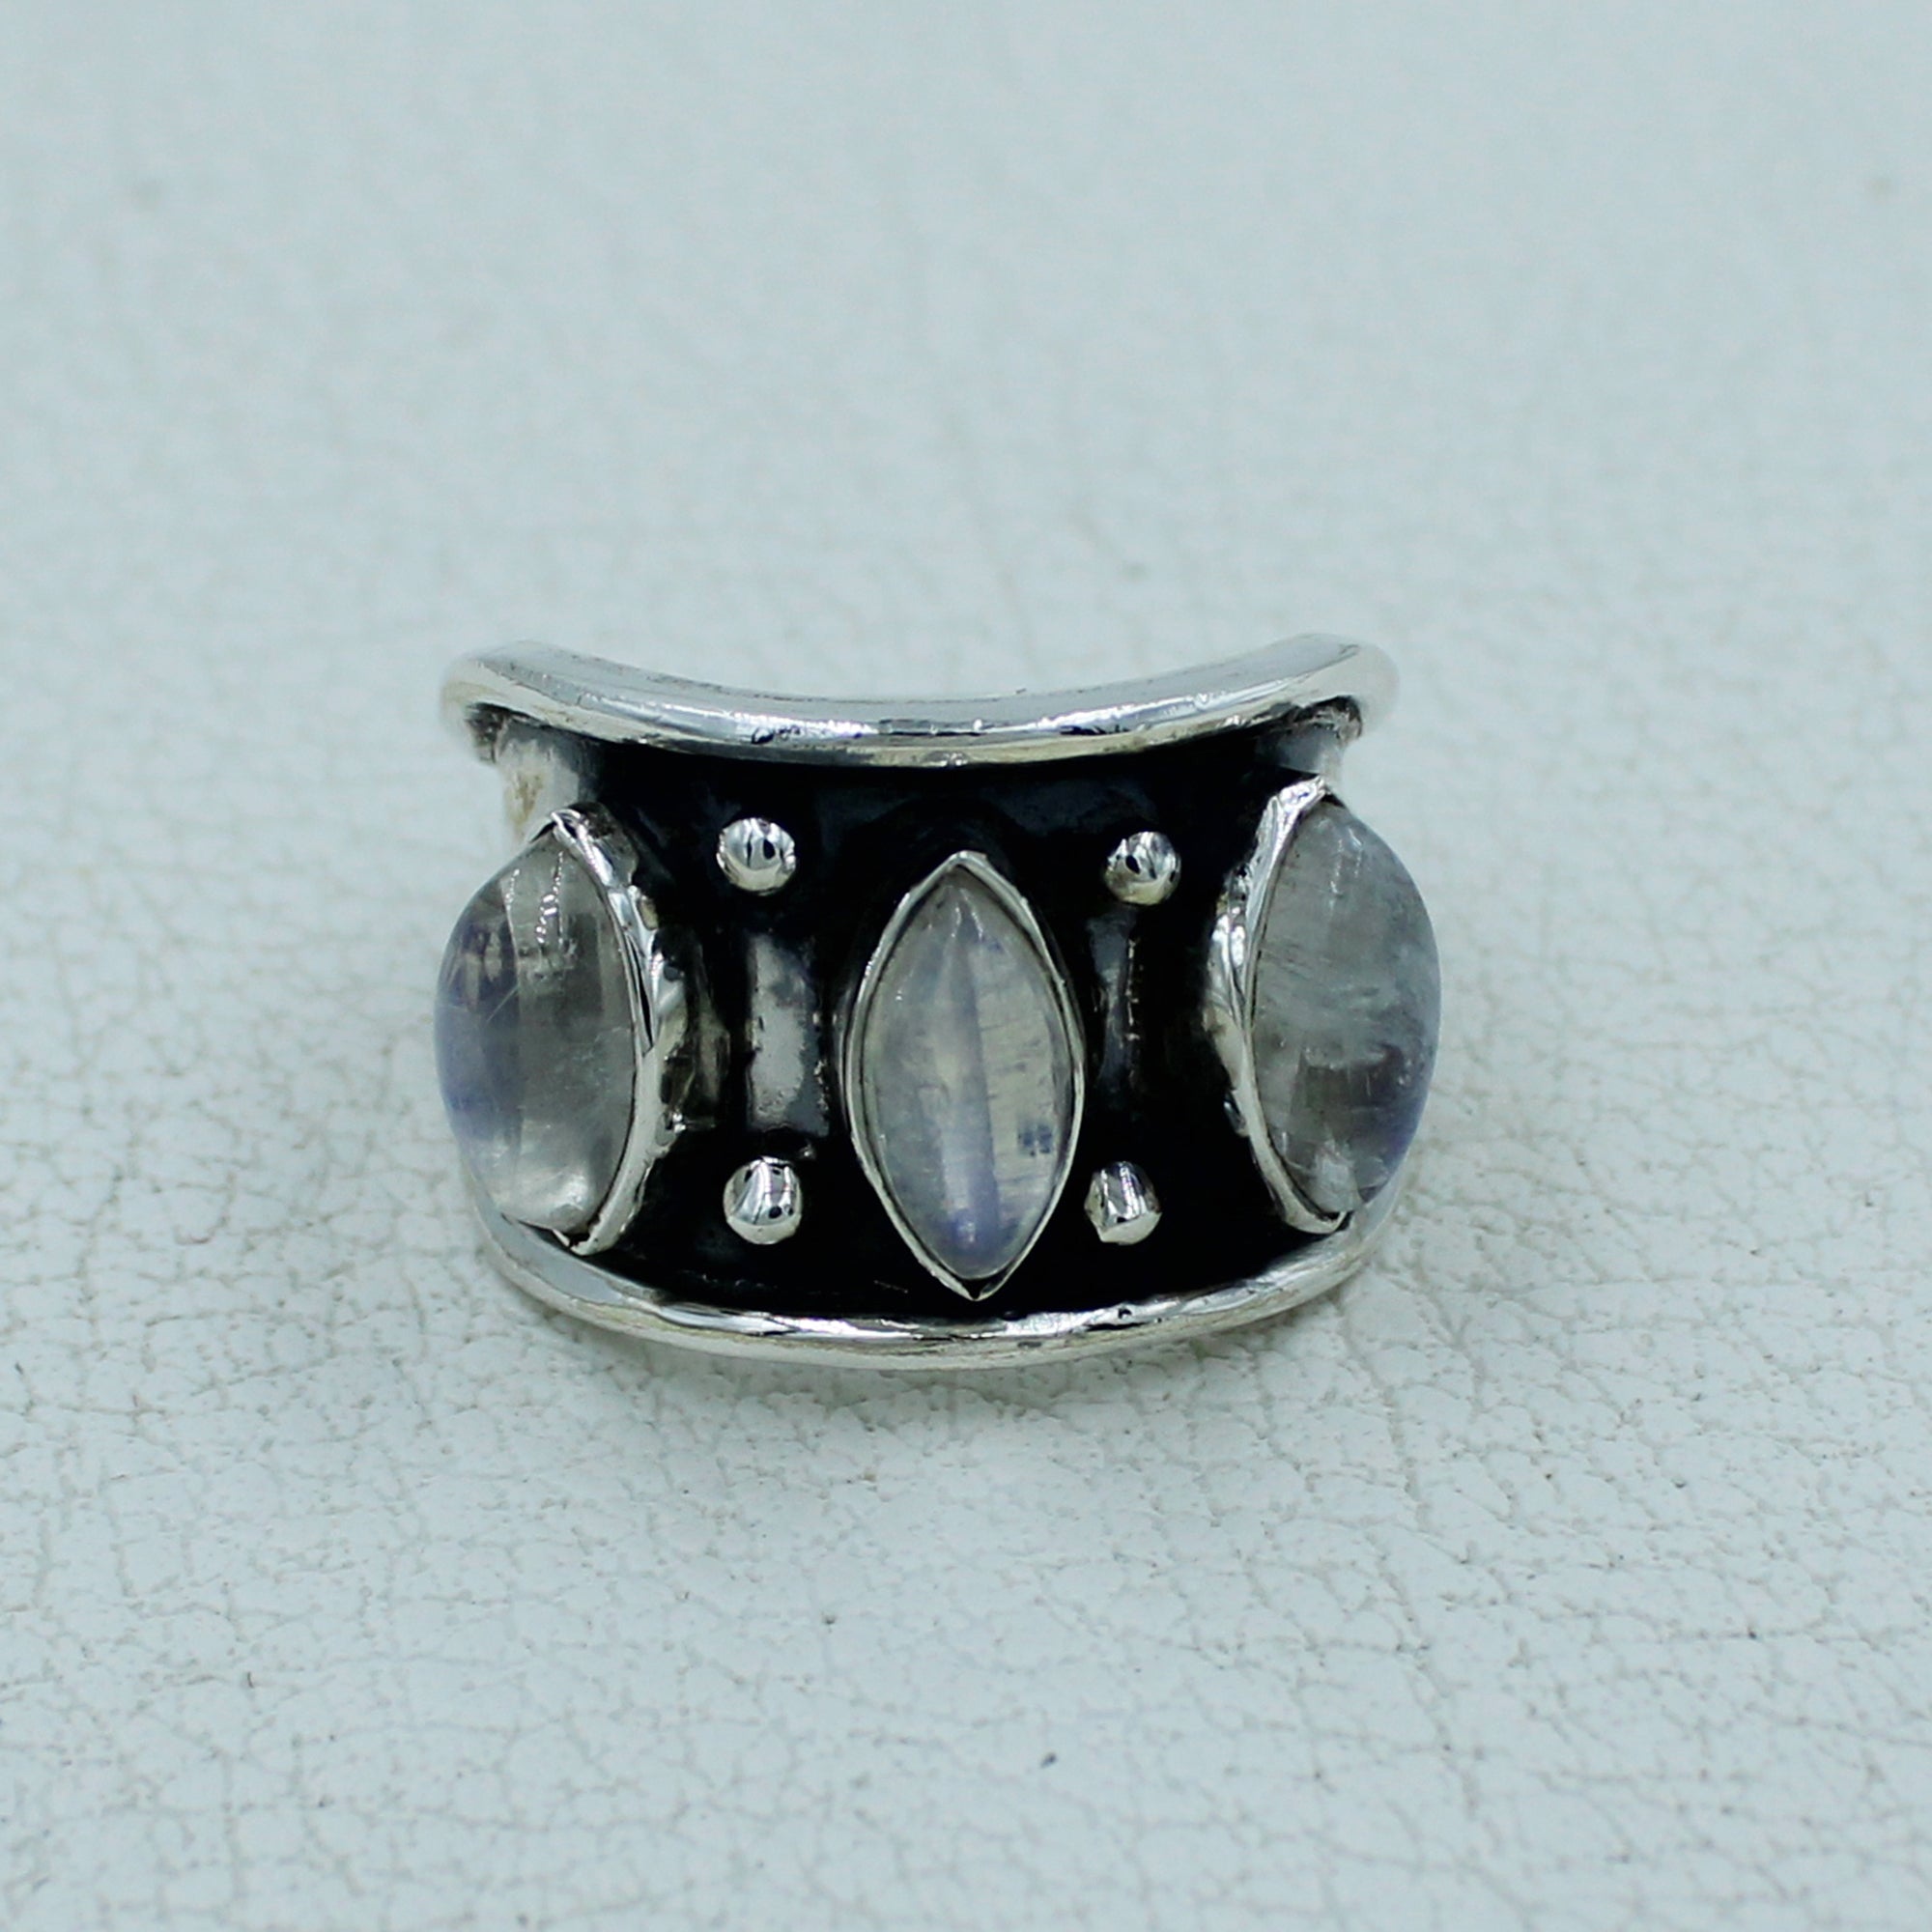 New Designed 925 Sterling Silver Moonstone Ring